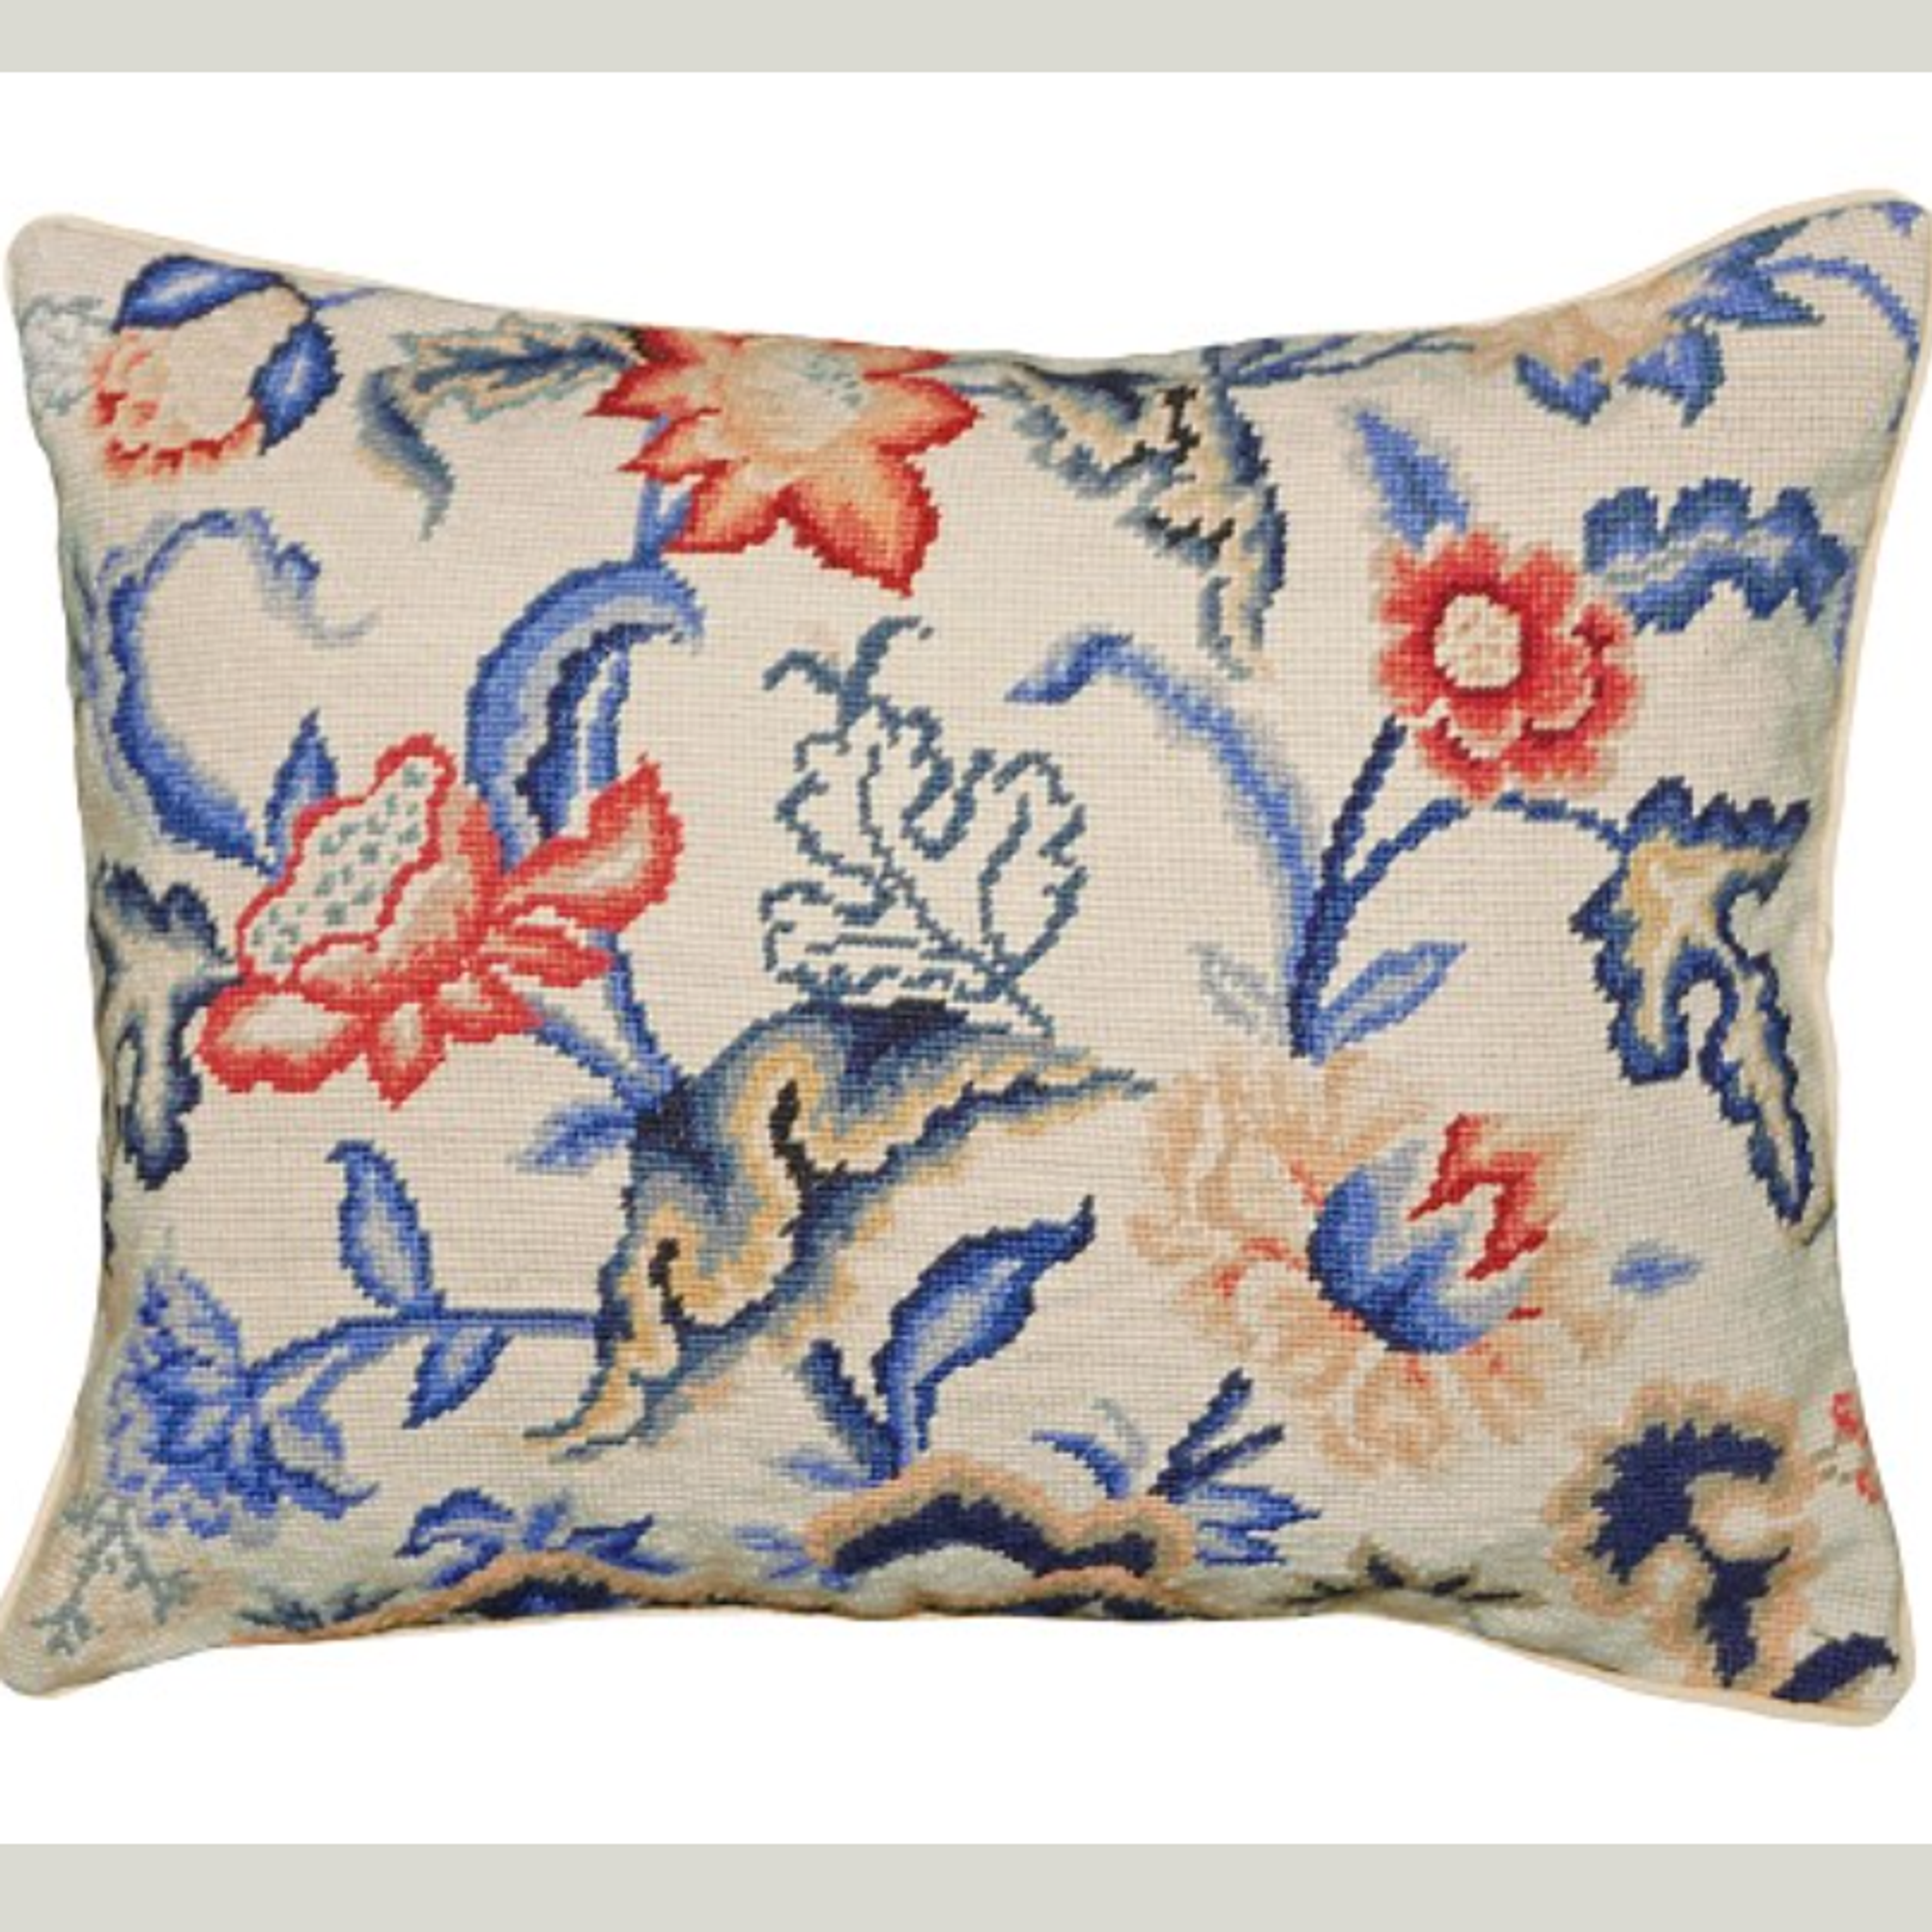 English Garden Tapestry Needlepoint Pillow